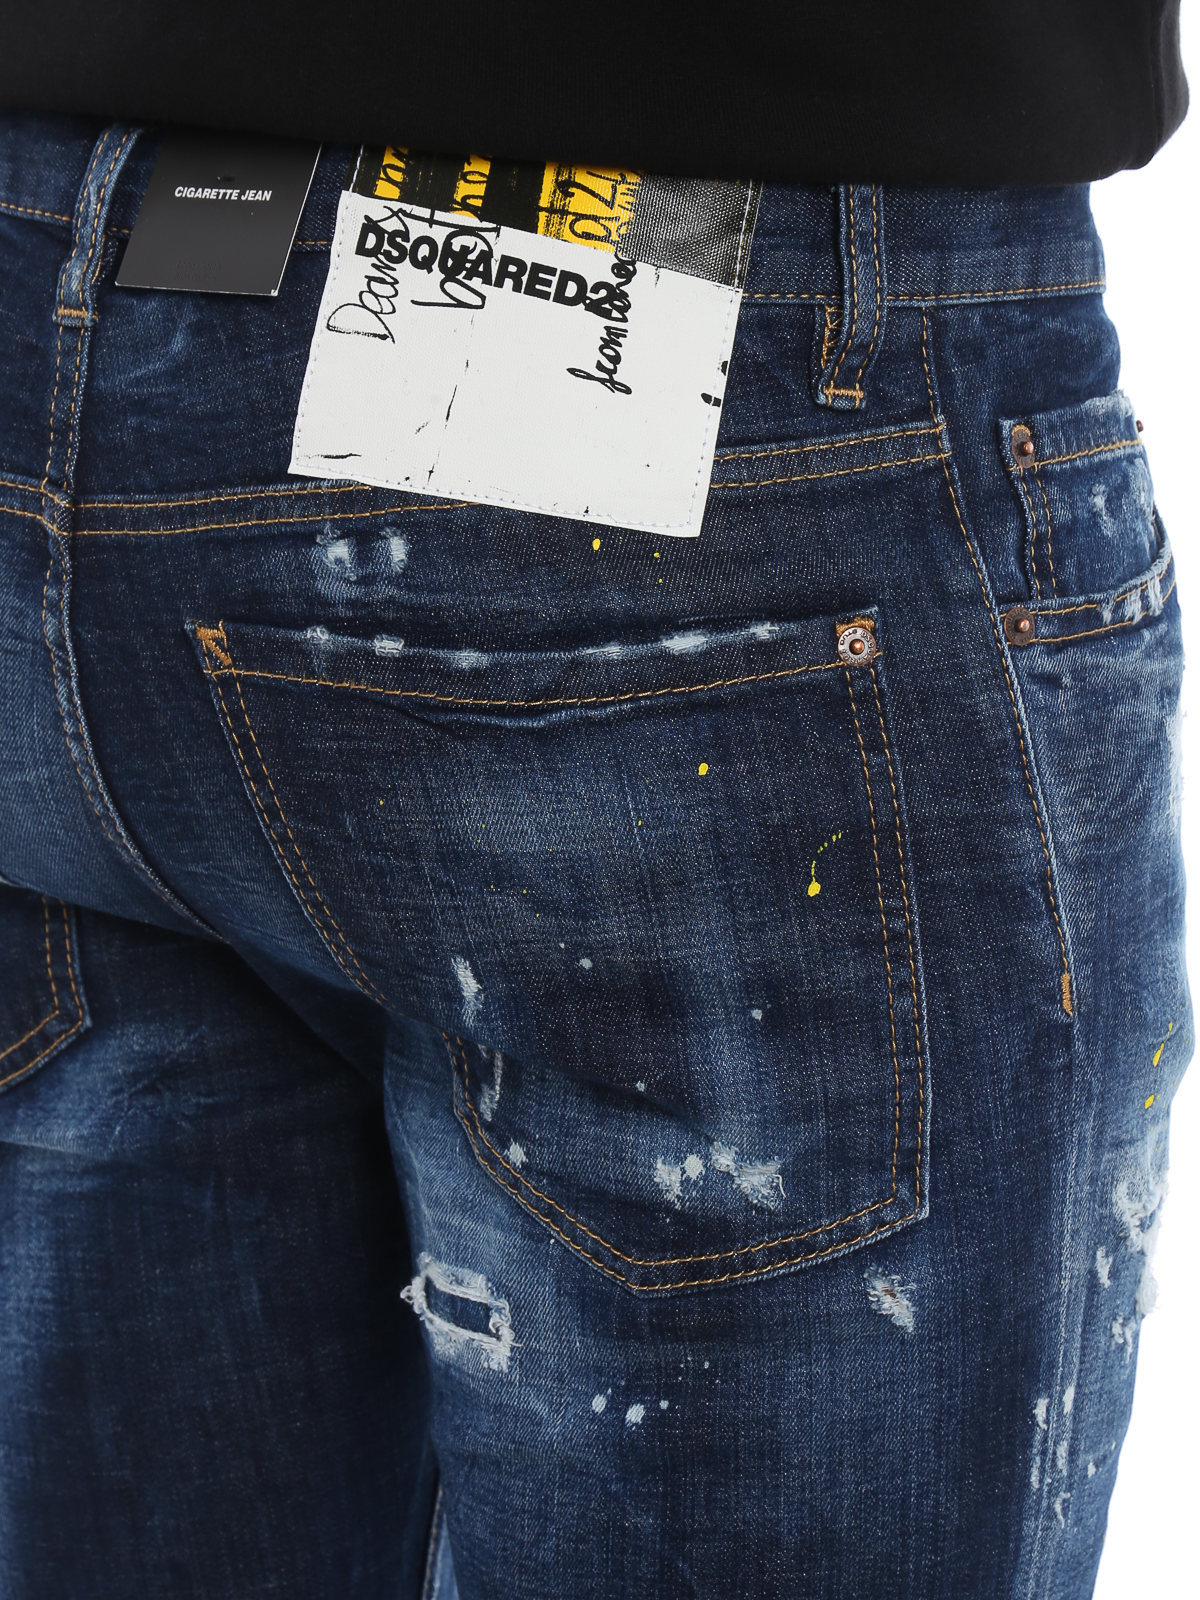 dsquared jeans sales